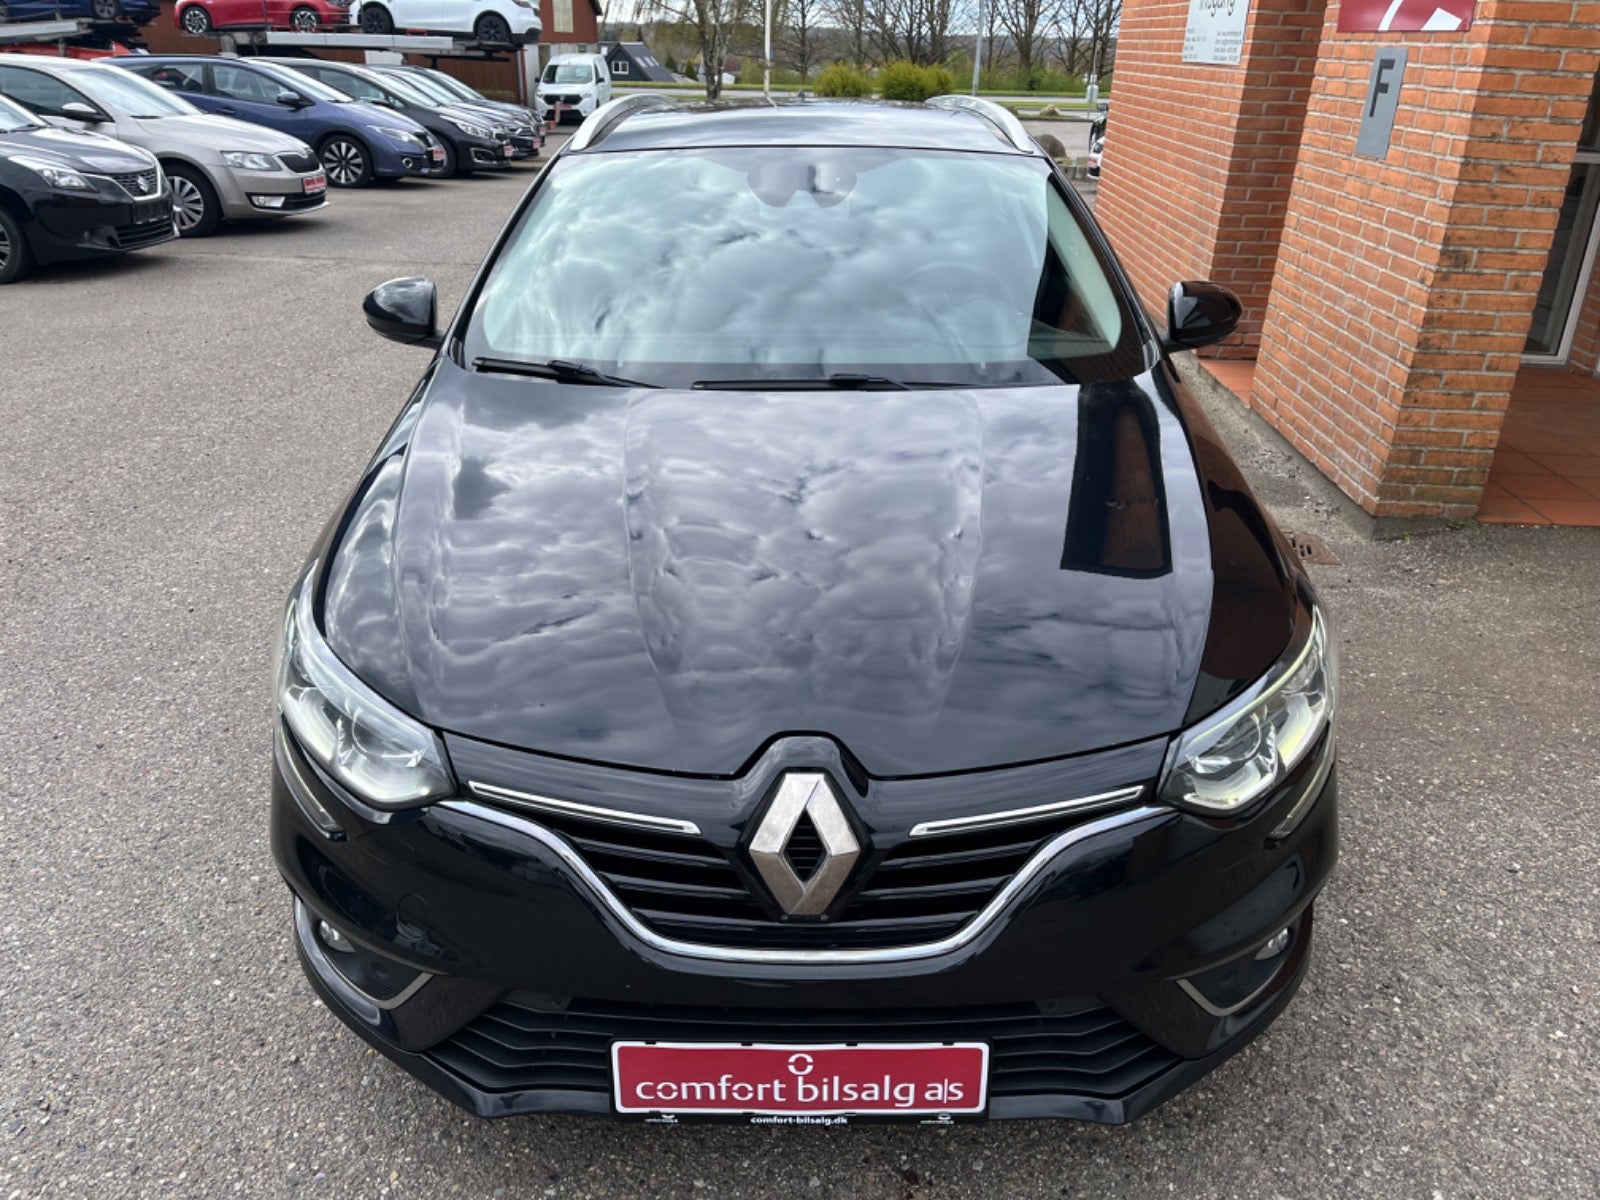 Renault Megane IV 2018